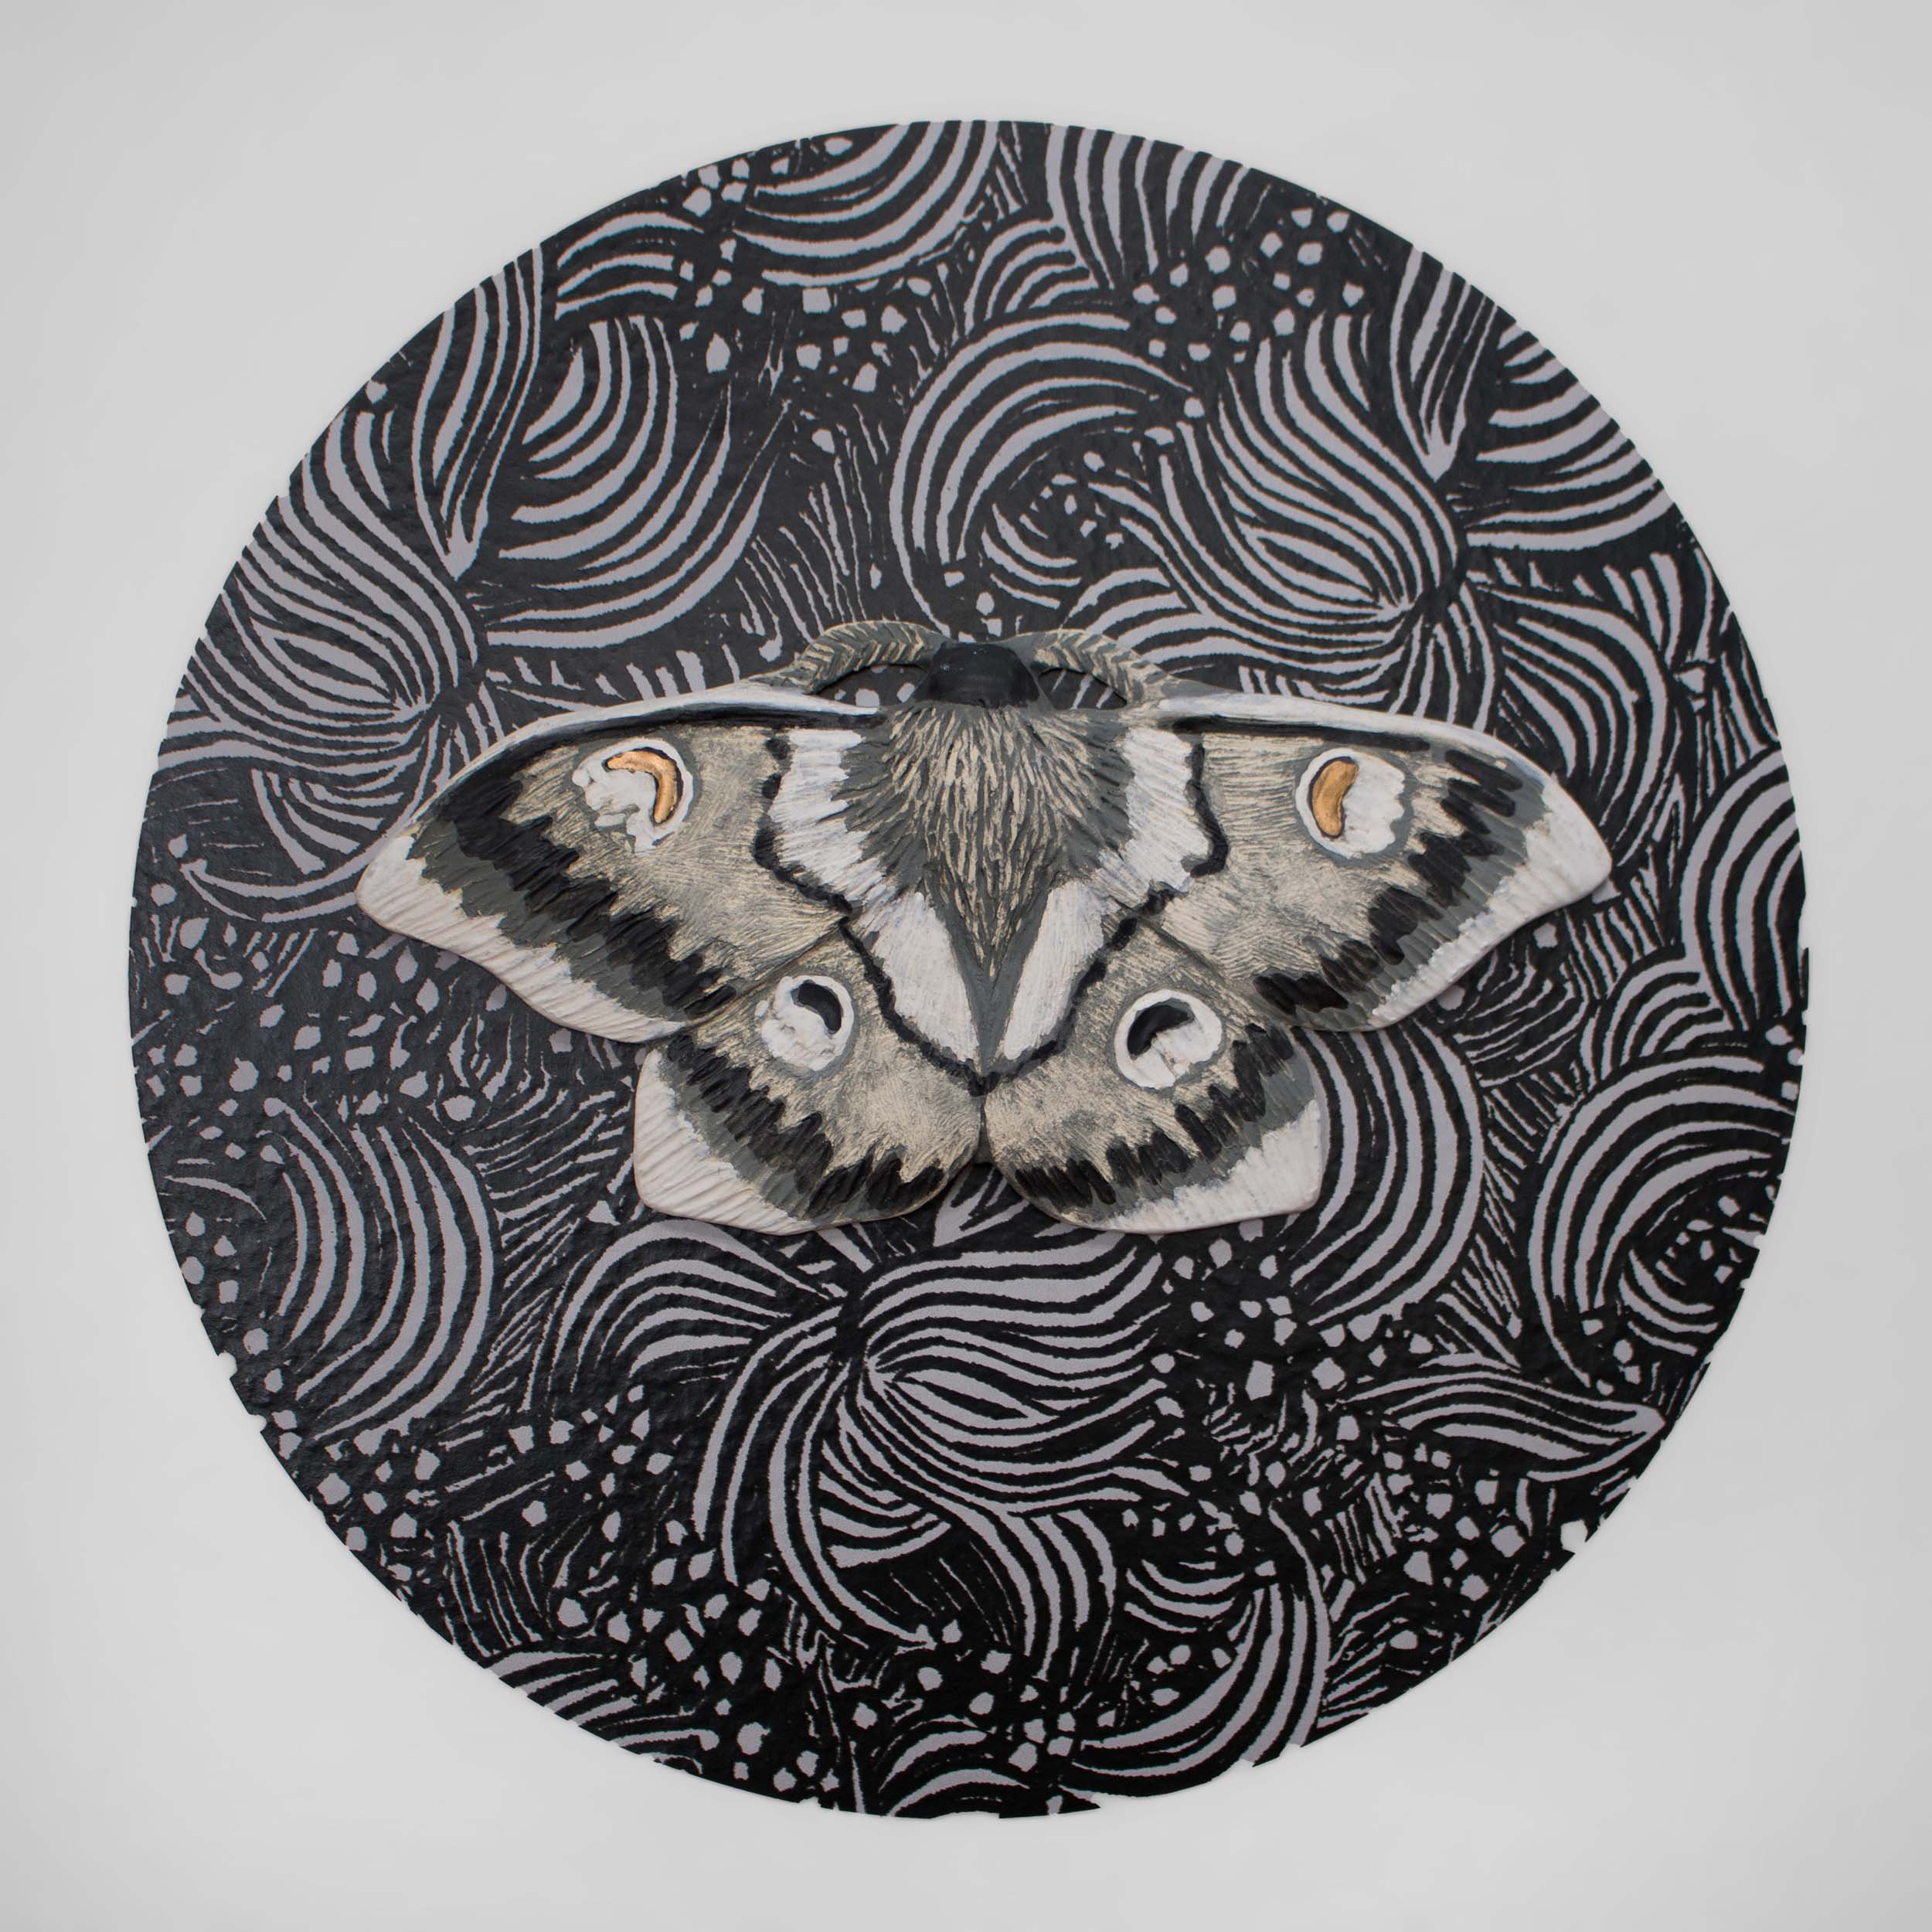   Moth 04,  ceramic moth mounted on wallpaper backdrop, 11.5”x11.5”x.5”, SOLD 